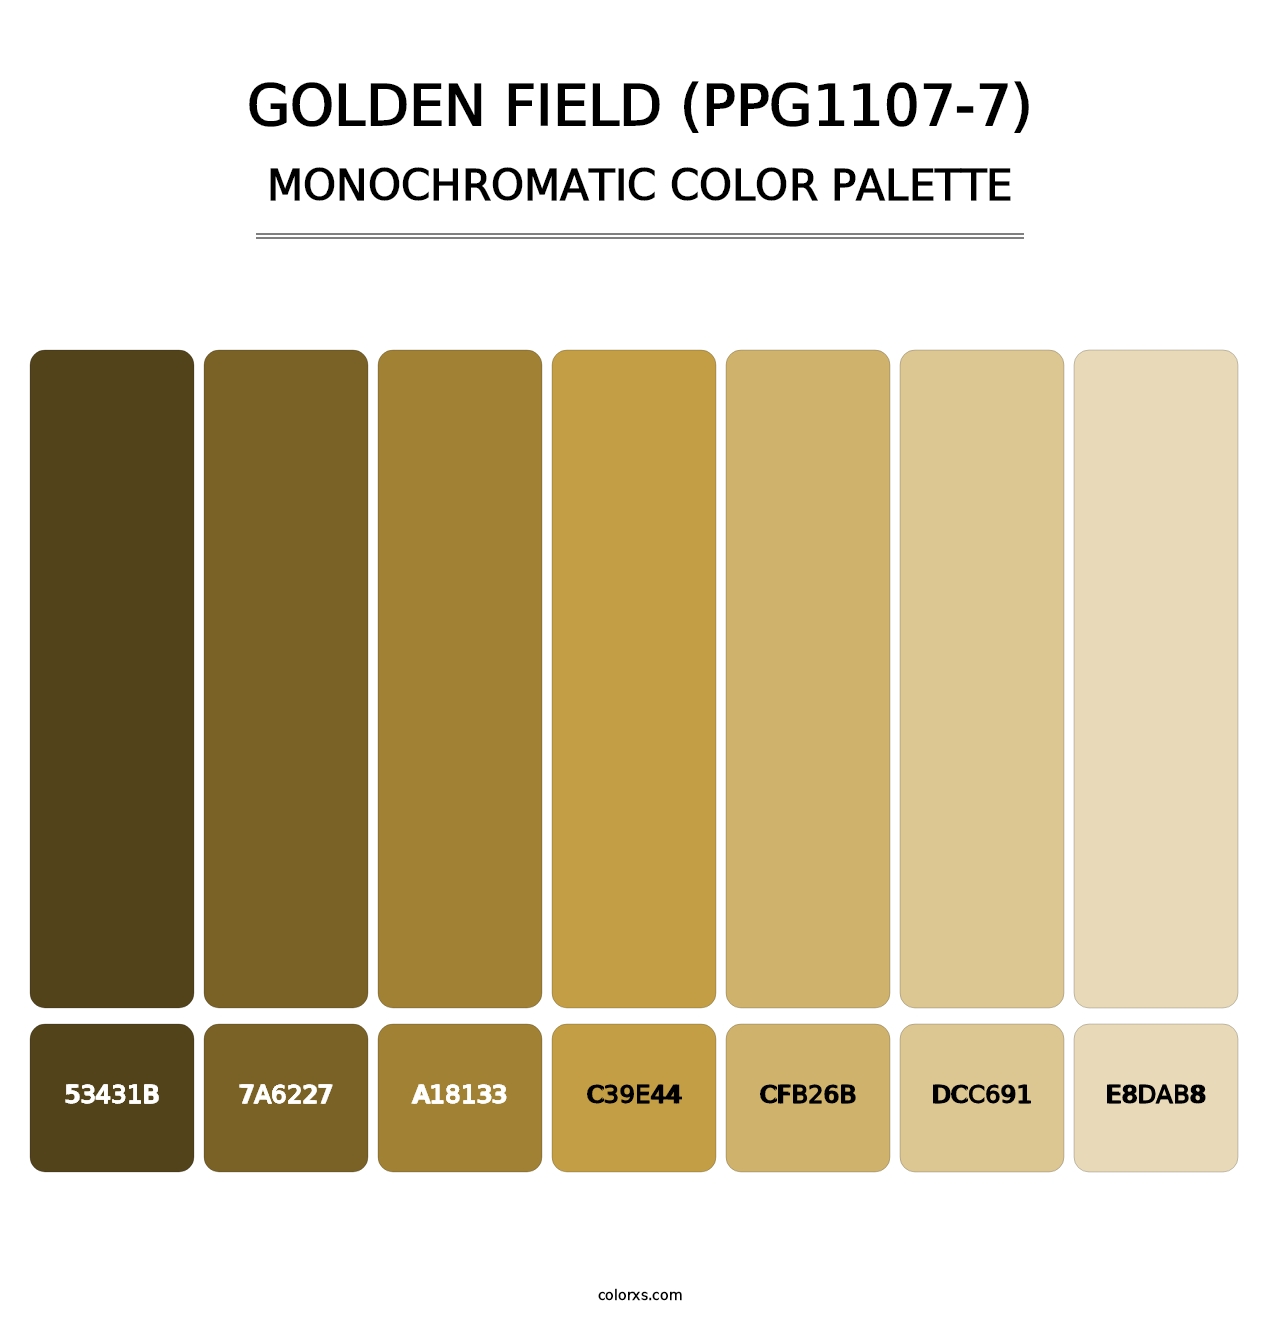 Golden Field (PPG1107-7) - Monochromatic Color Palette